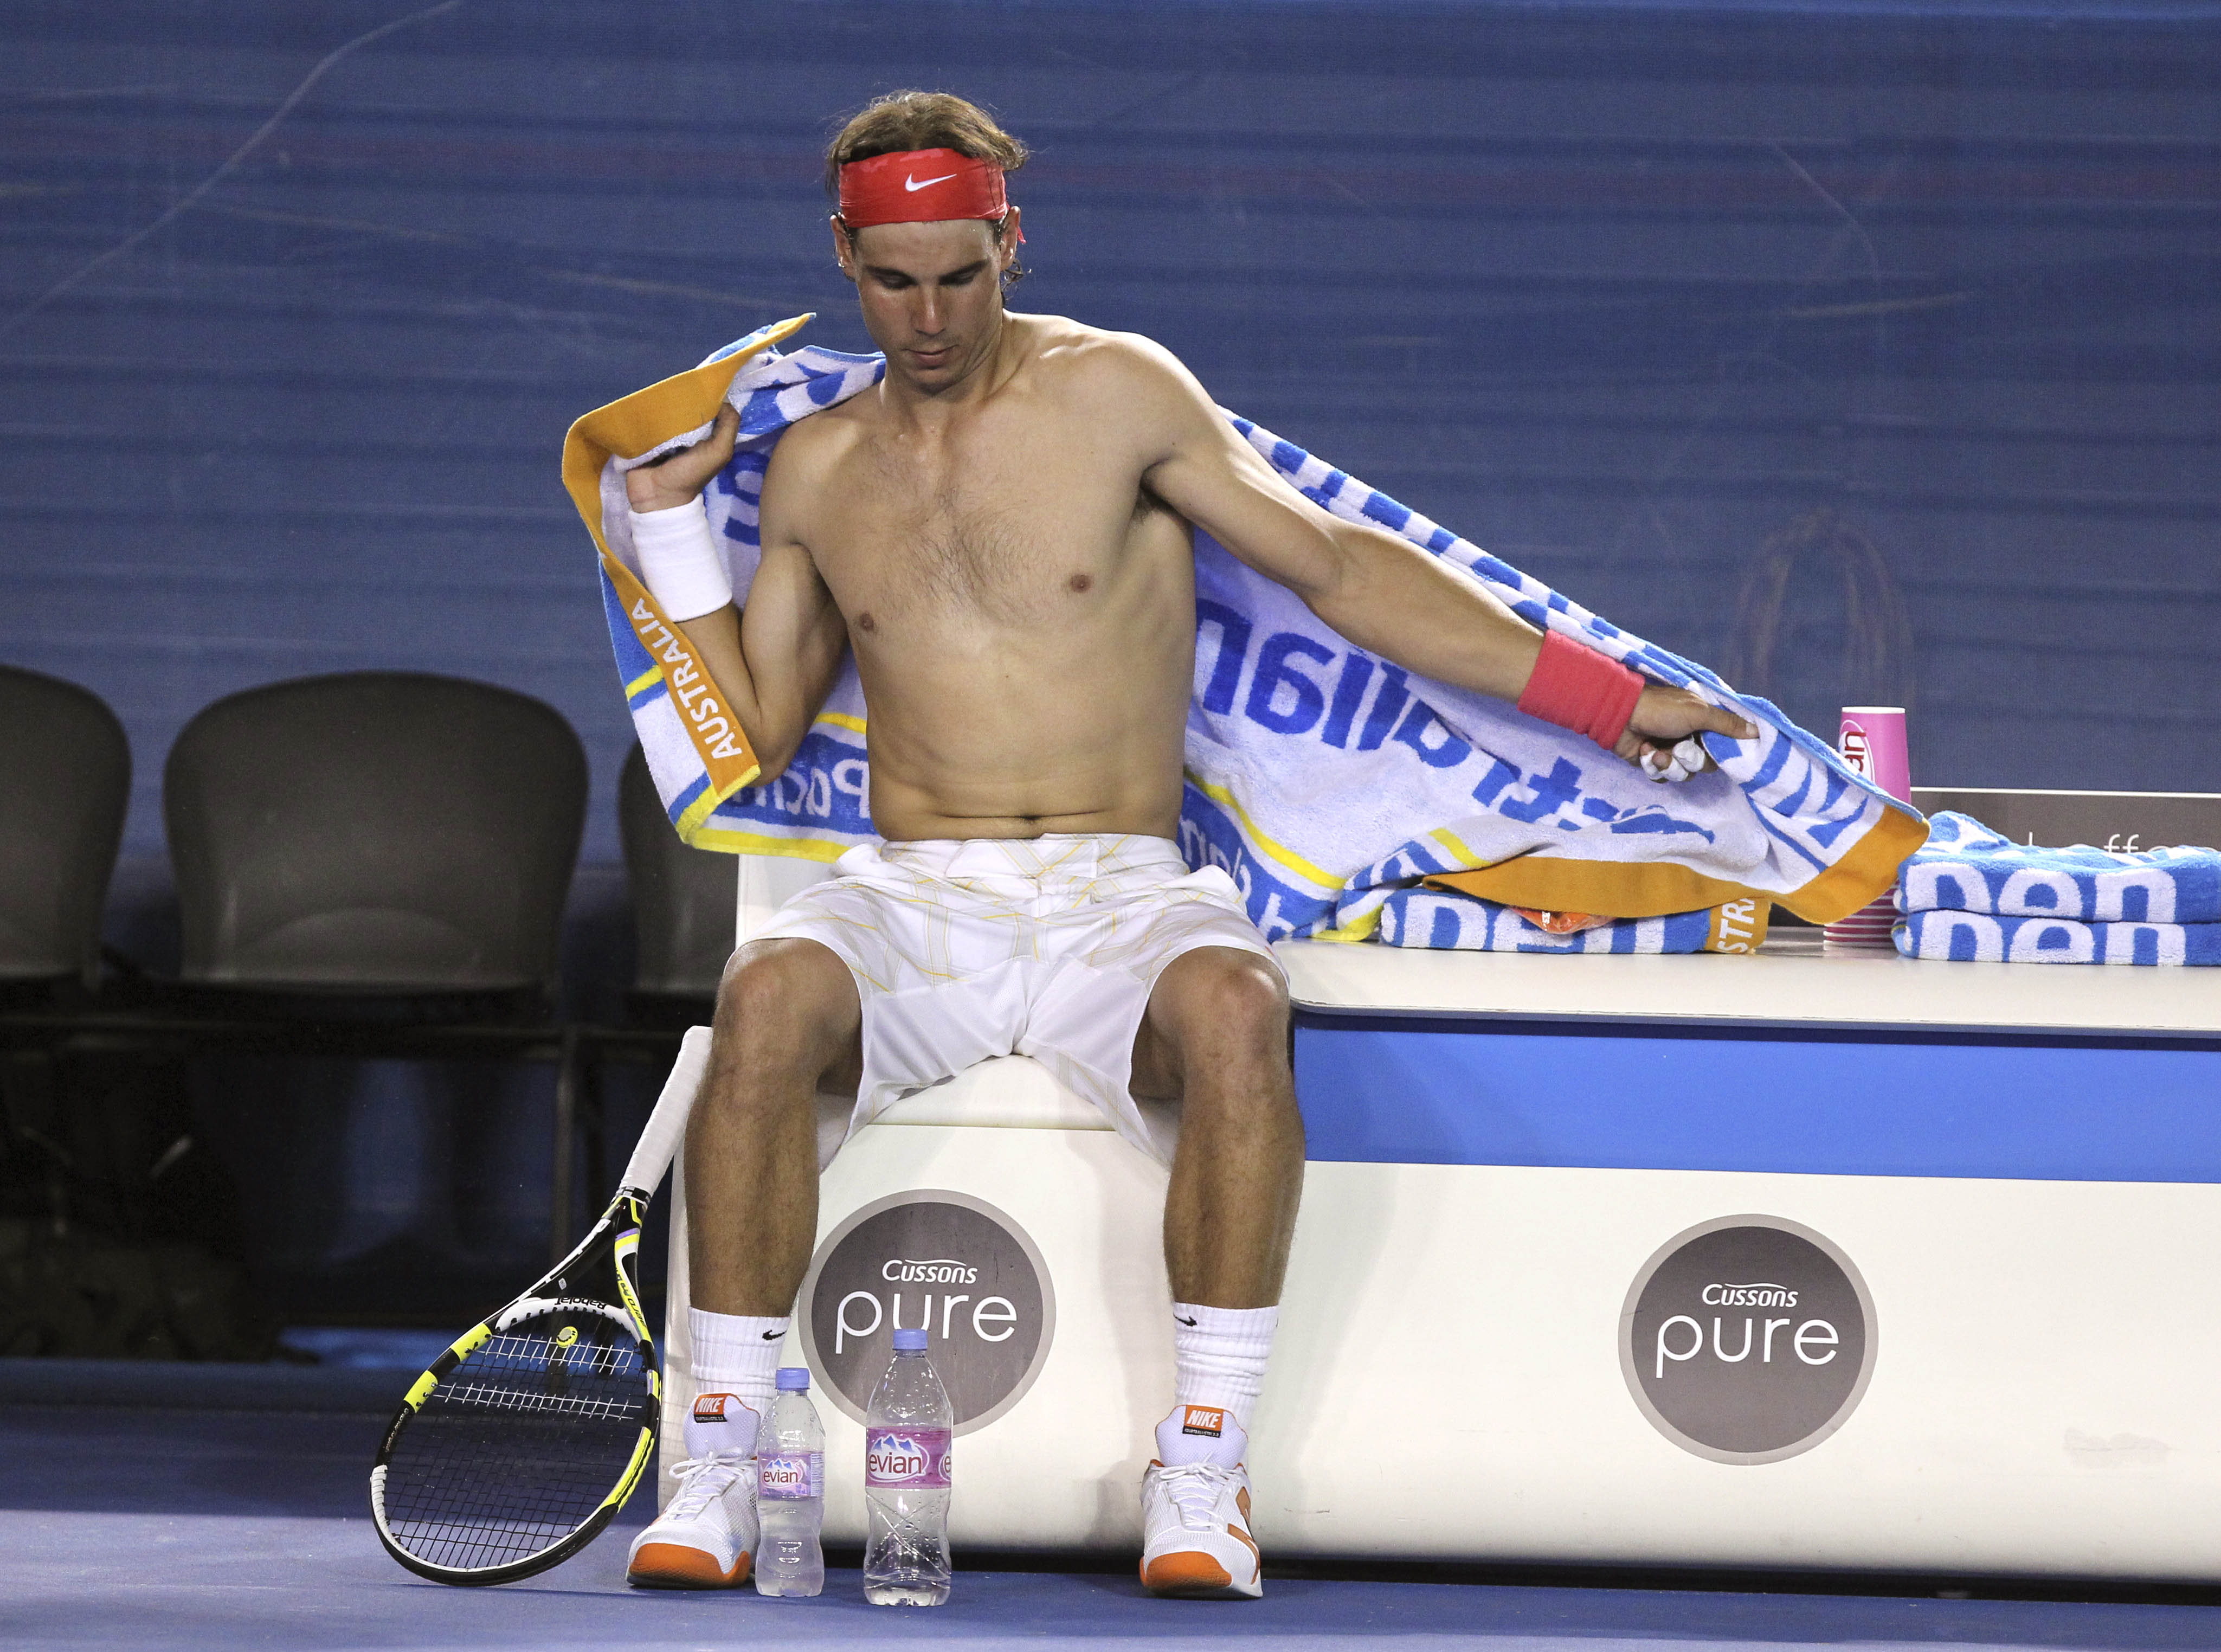 Tennis, Australian Open, Roger Federer, Rafael Nadal, Andy Roddick, Andy Murray, Kim Clijsters, Juan Martin del Potro